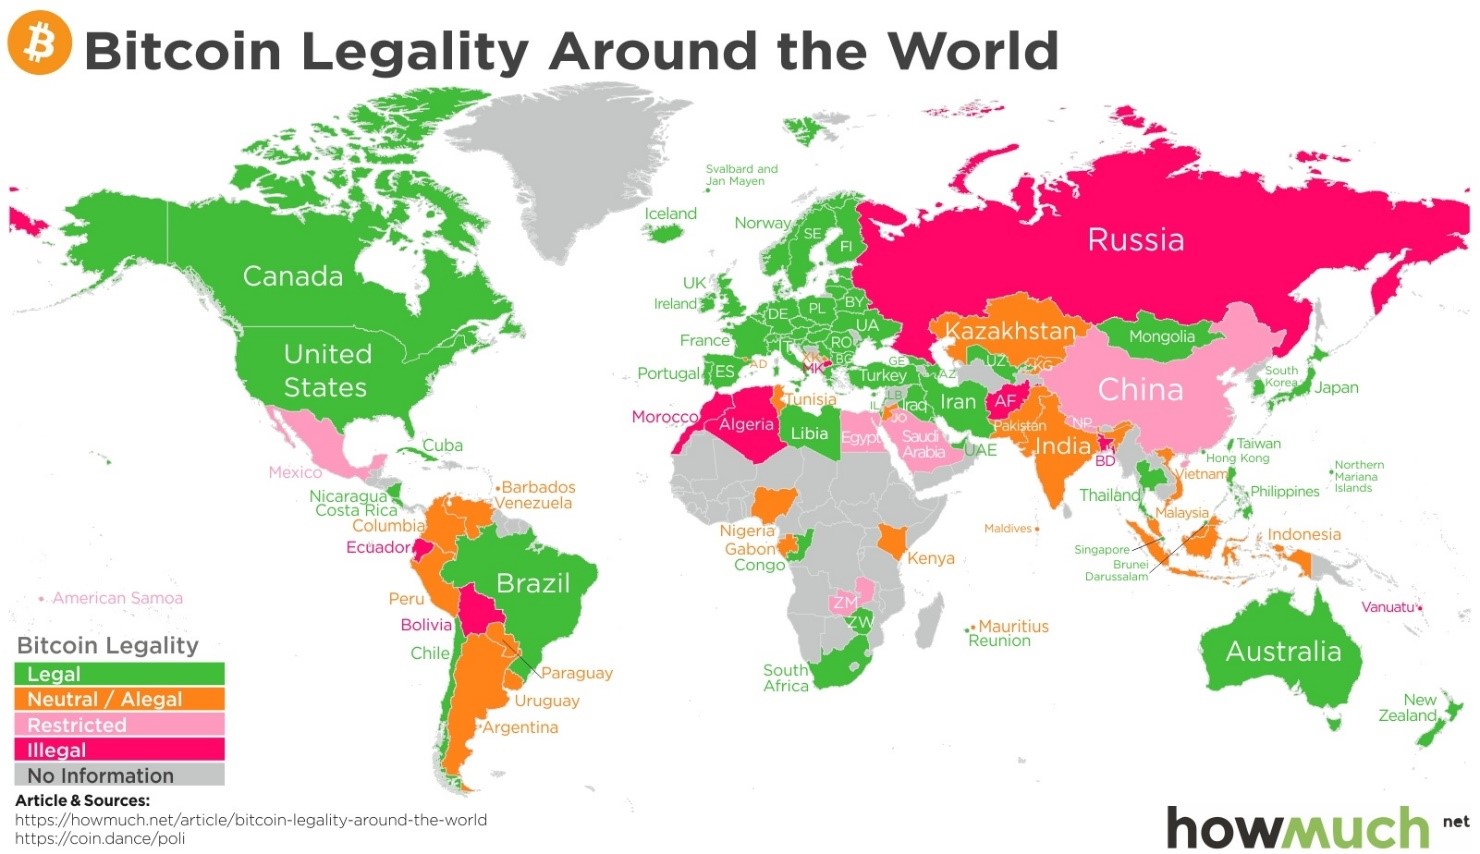 Bitcoin legality around the world